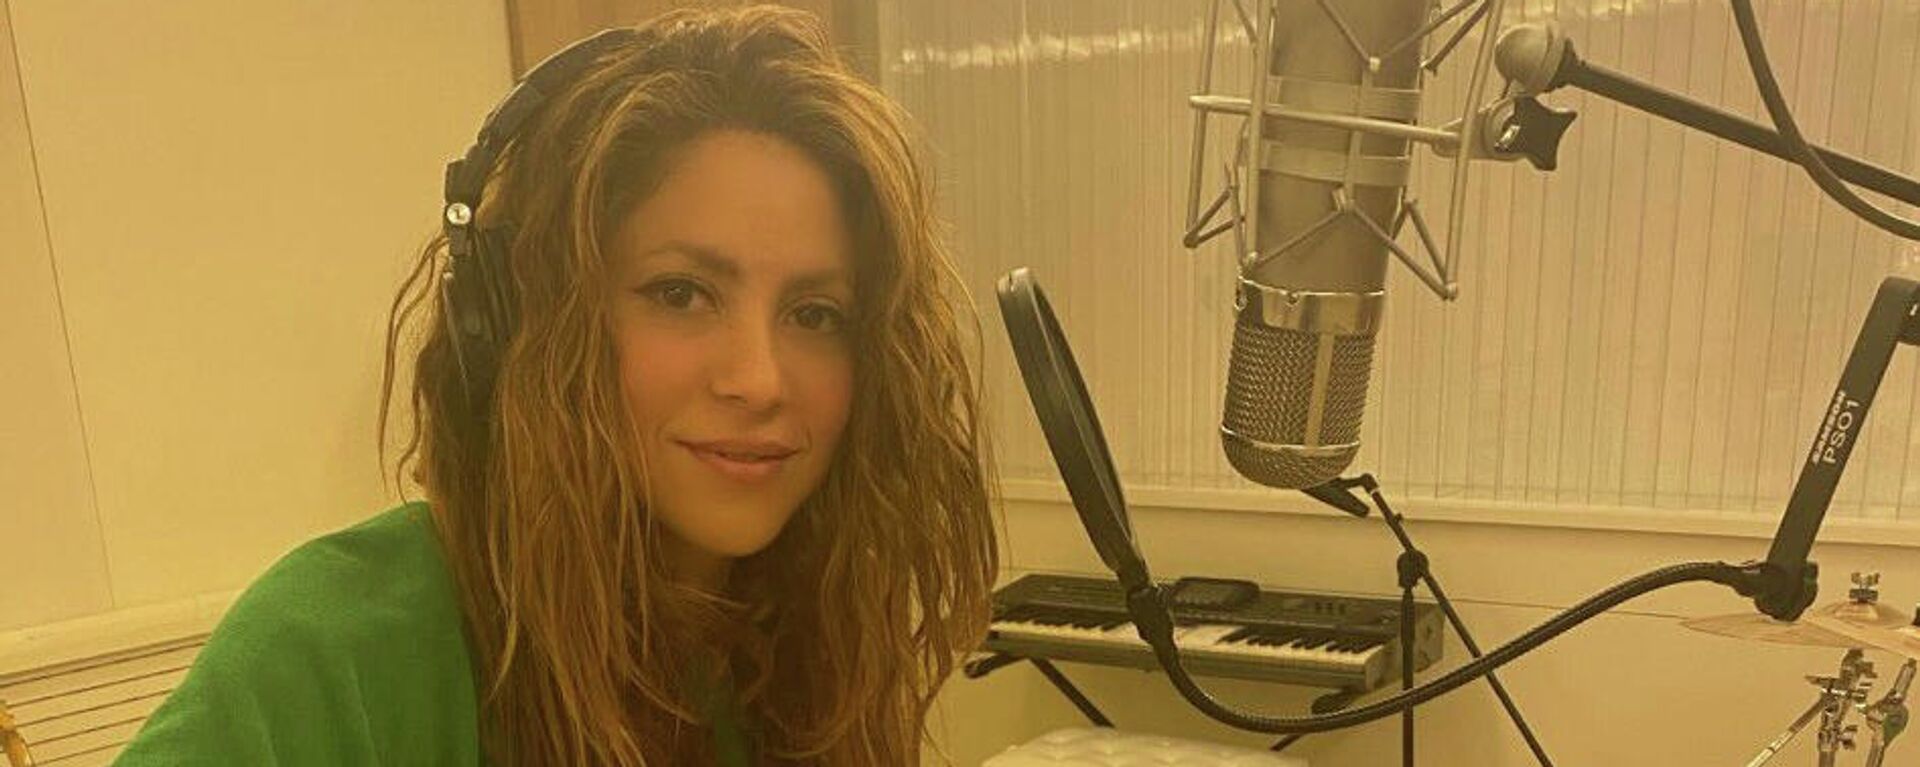 Shakira, cantante colombiana - Sputnik Mundo, 1920, 04.10.2021